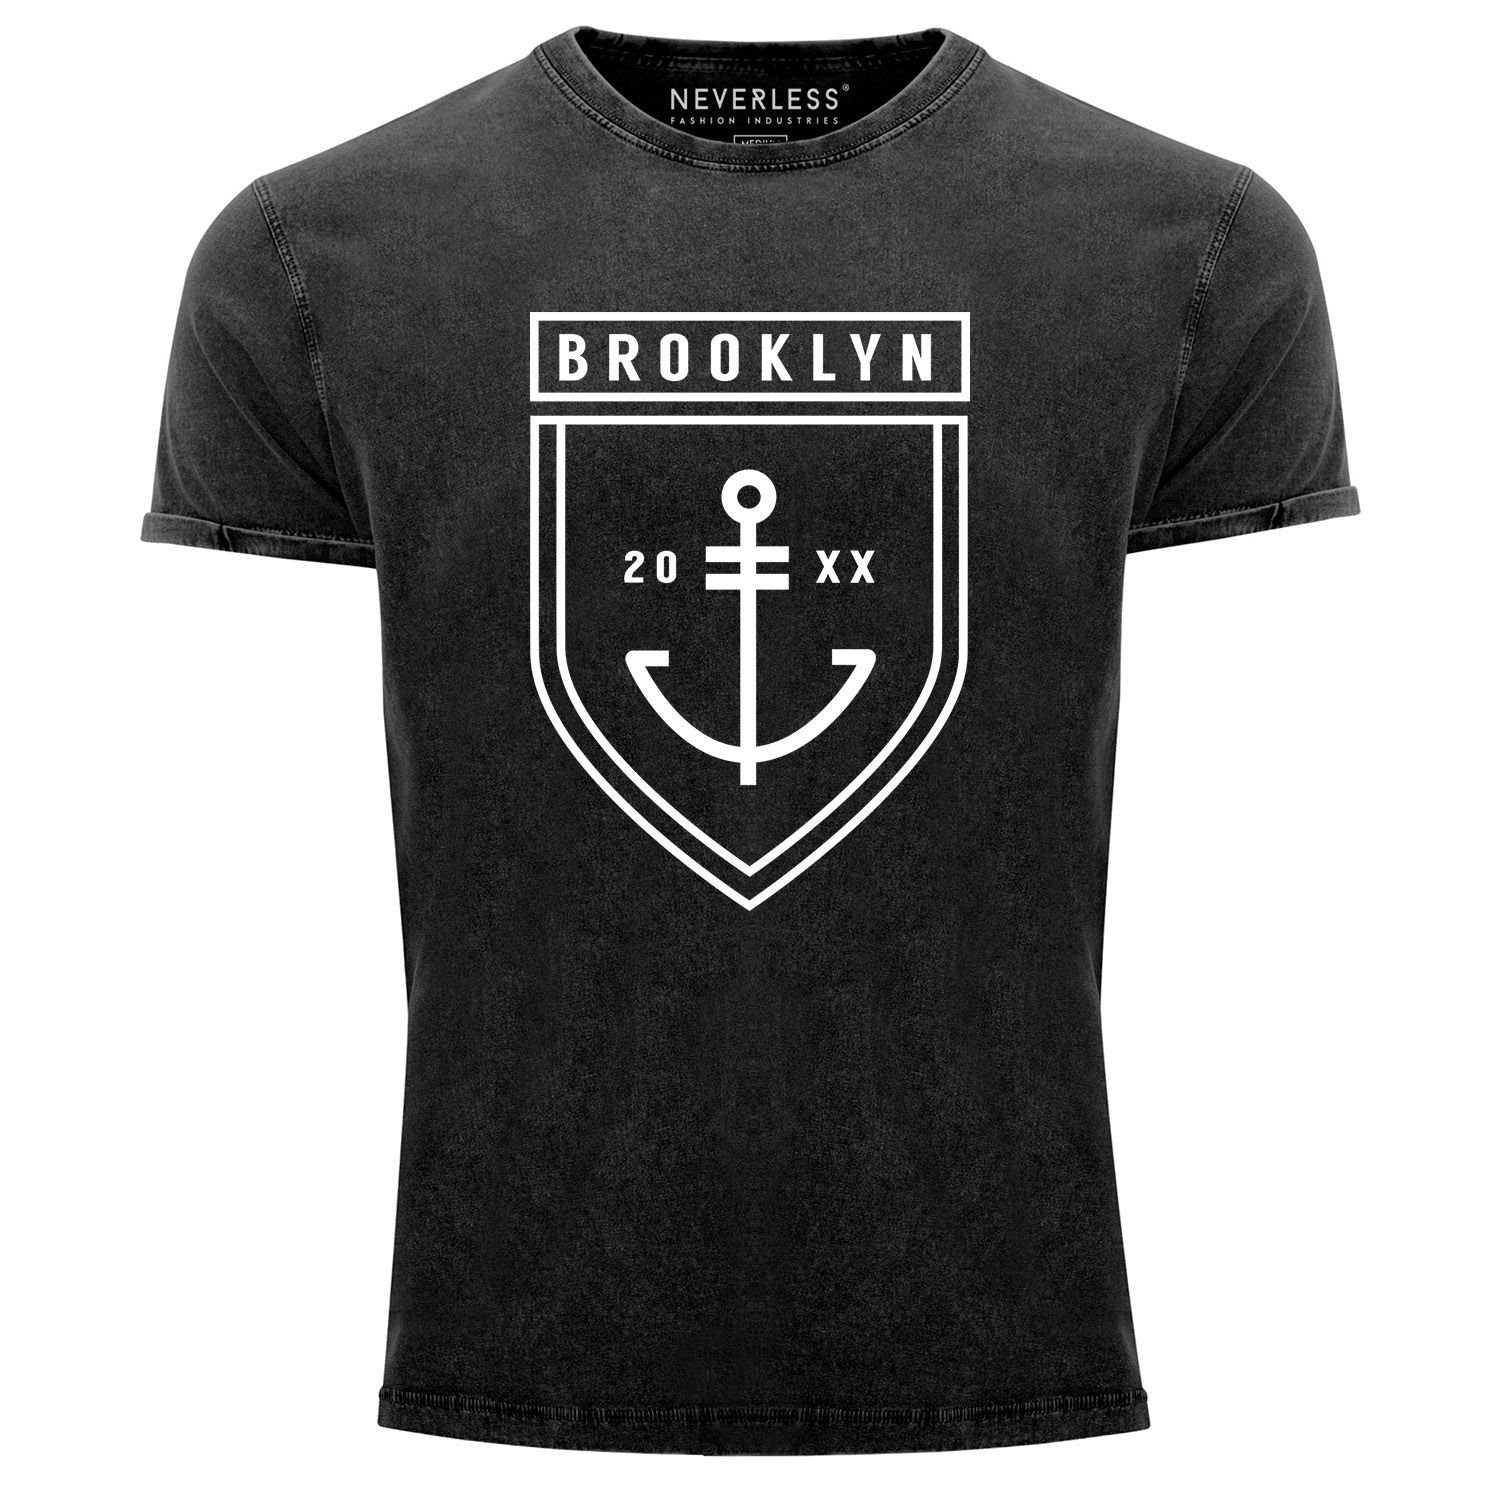 Neverless Print-Shirt Cooles Angesagtes Herren T-Shirt Vintage Shirt Brooklyn Anker Aufdruck Used Look Slim Fit Neverless® mit Print schwarz